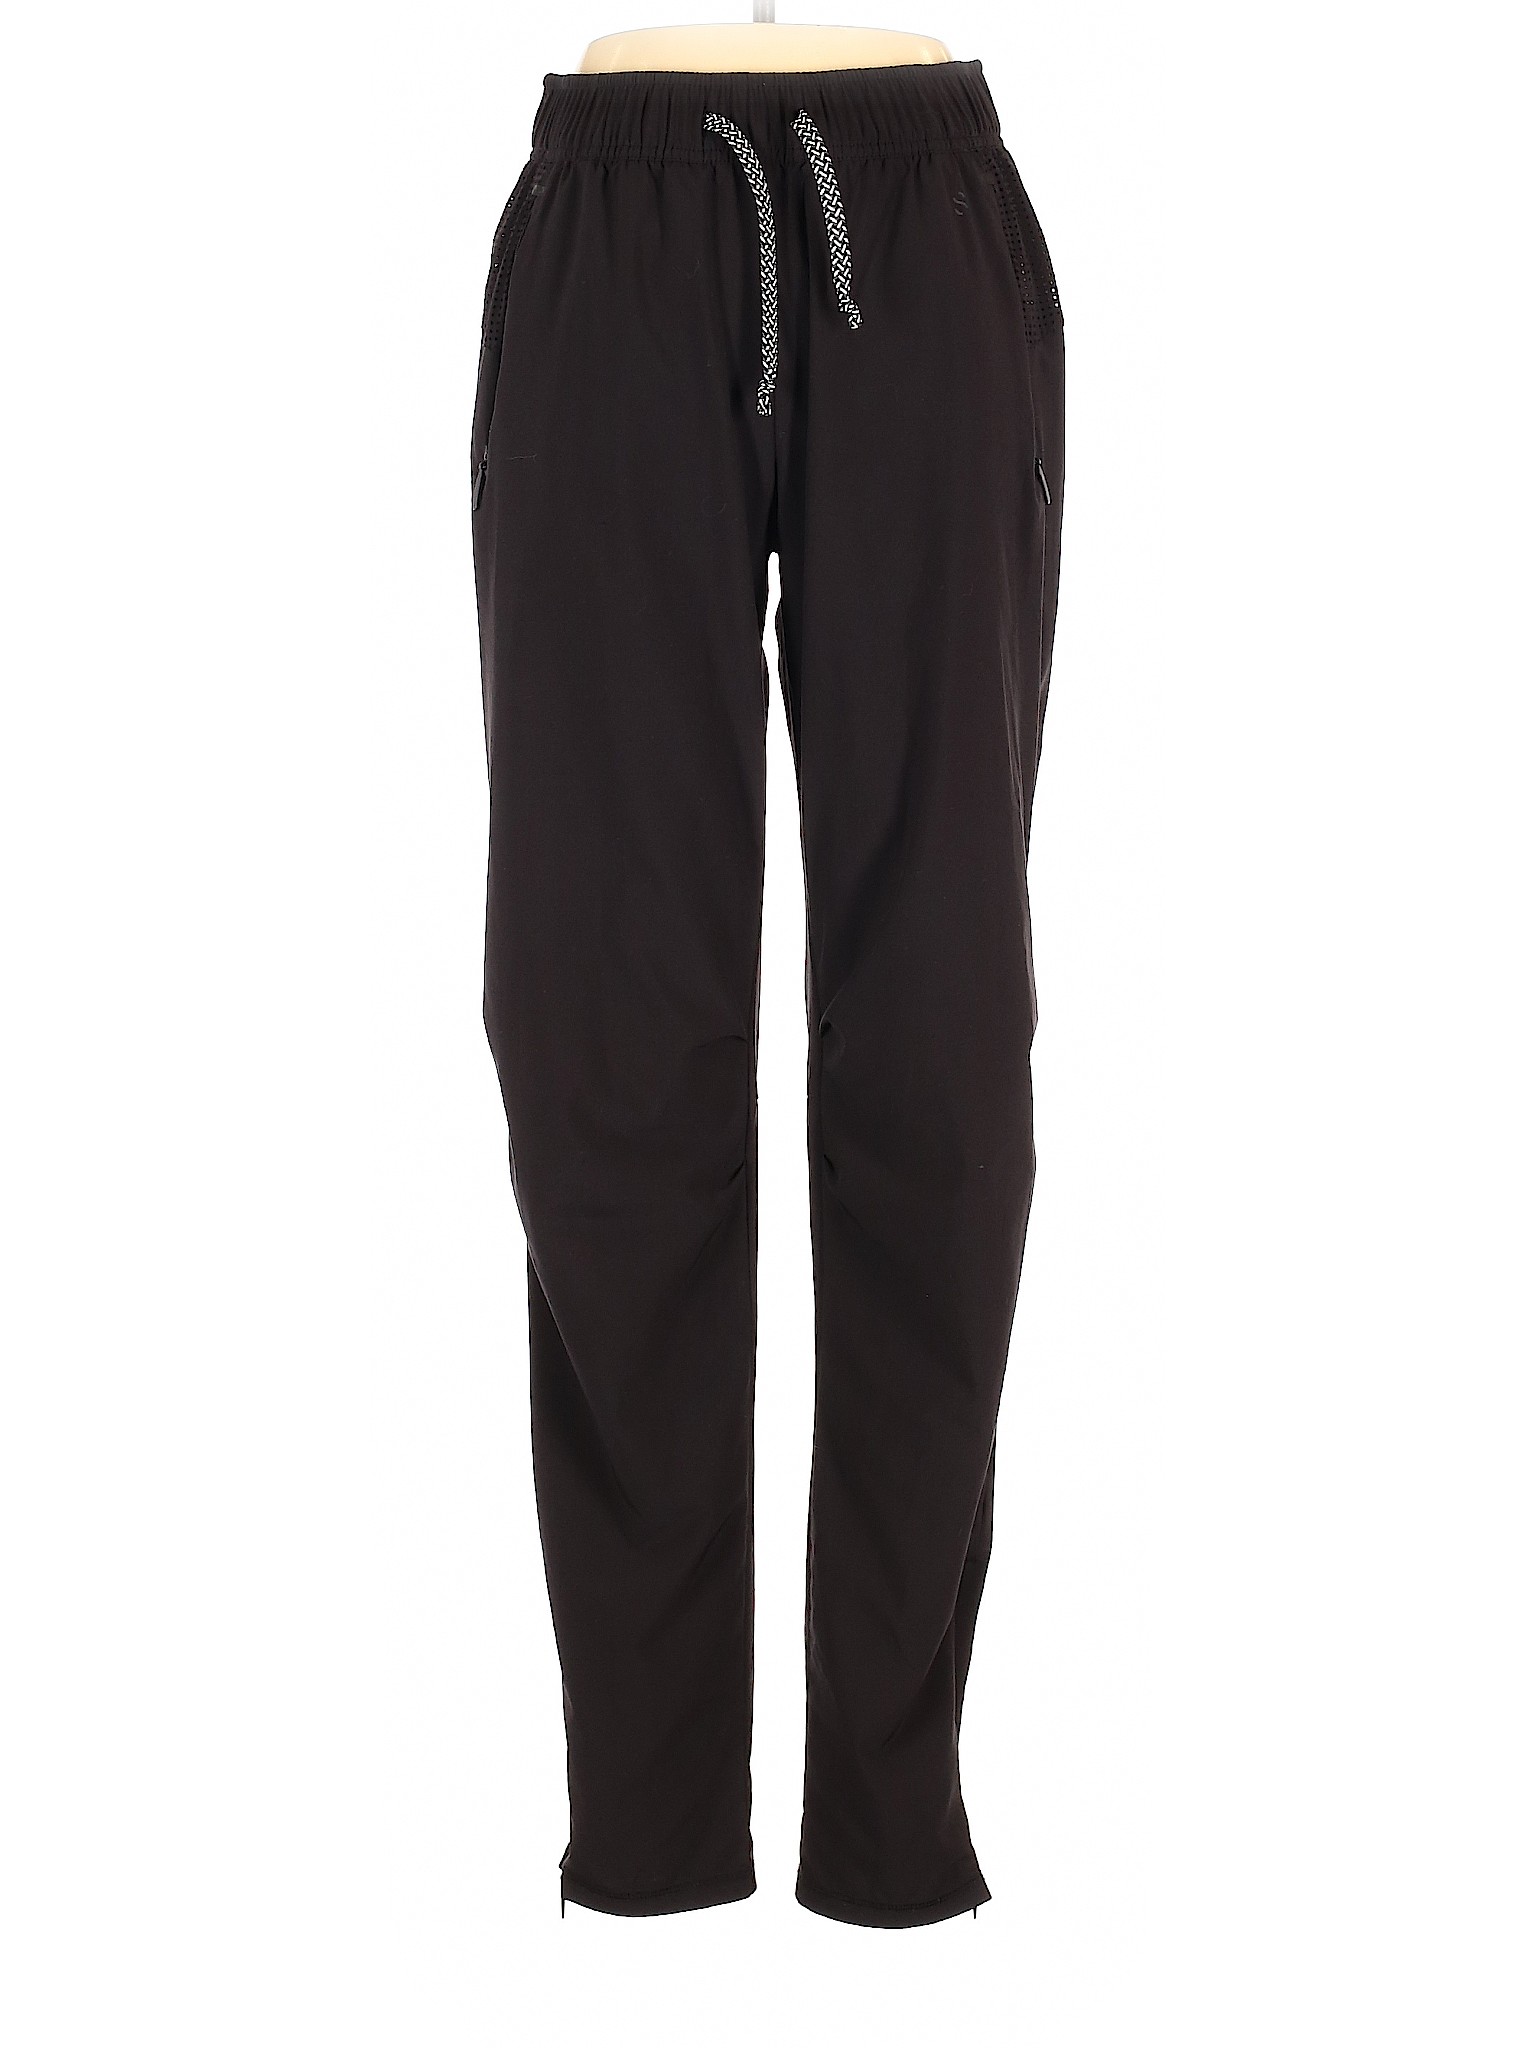 H&M Women Black Casual Pants 4 | eBay